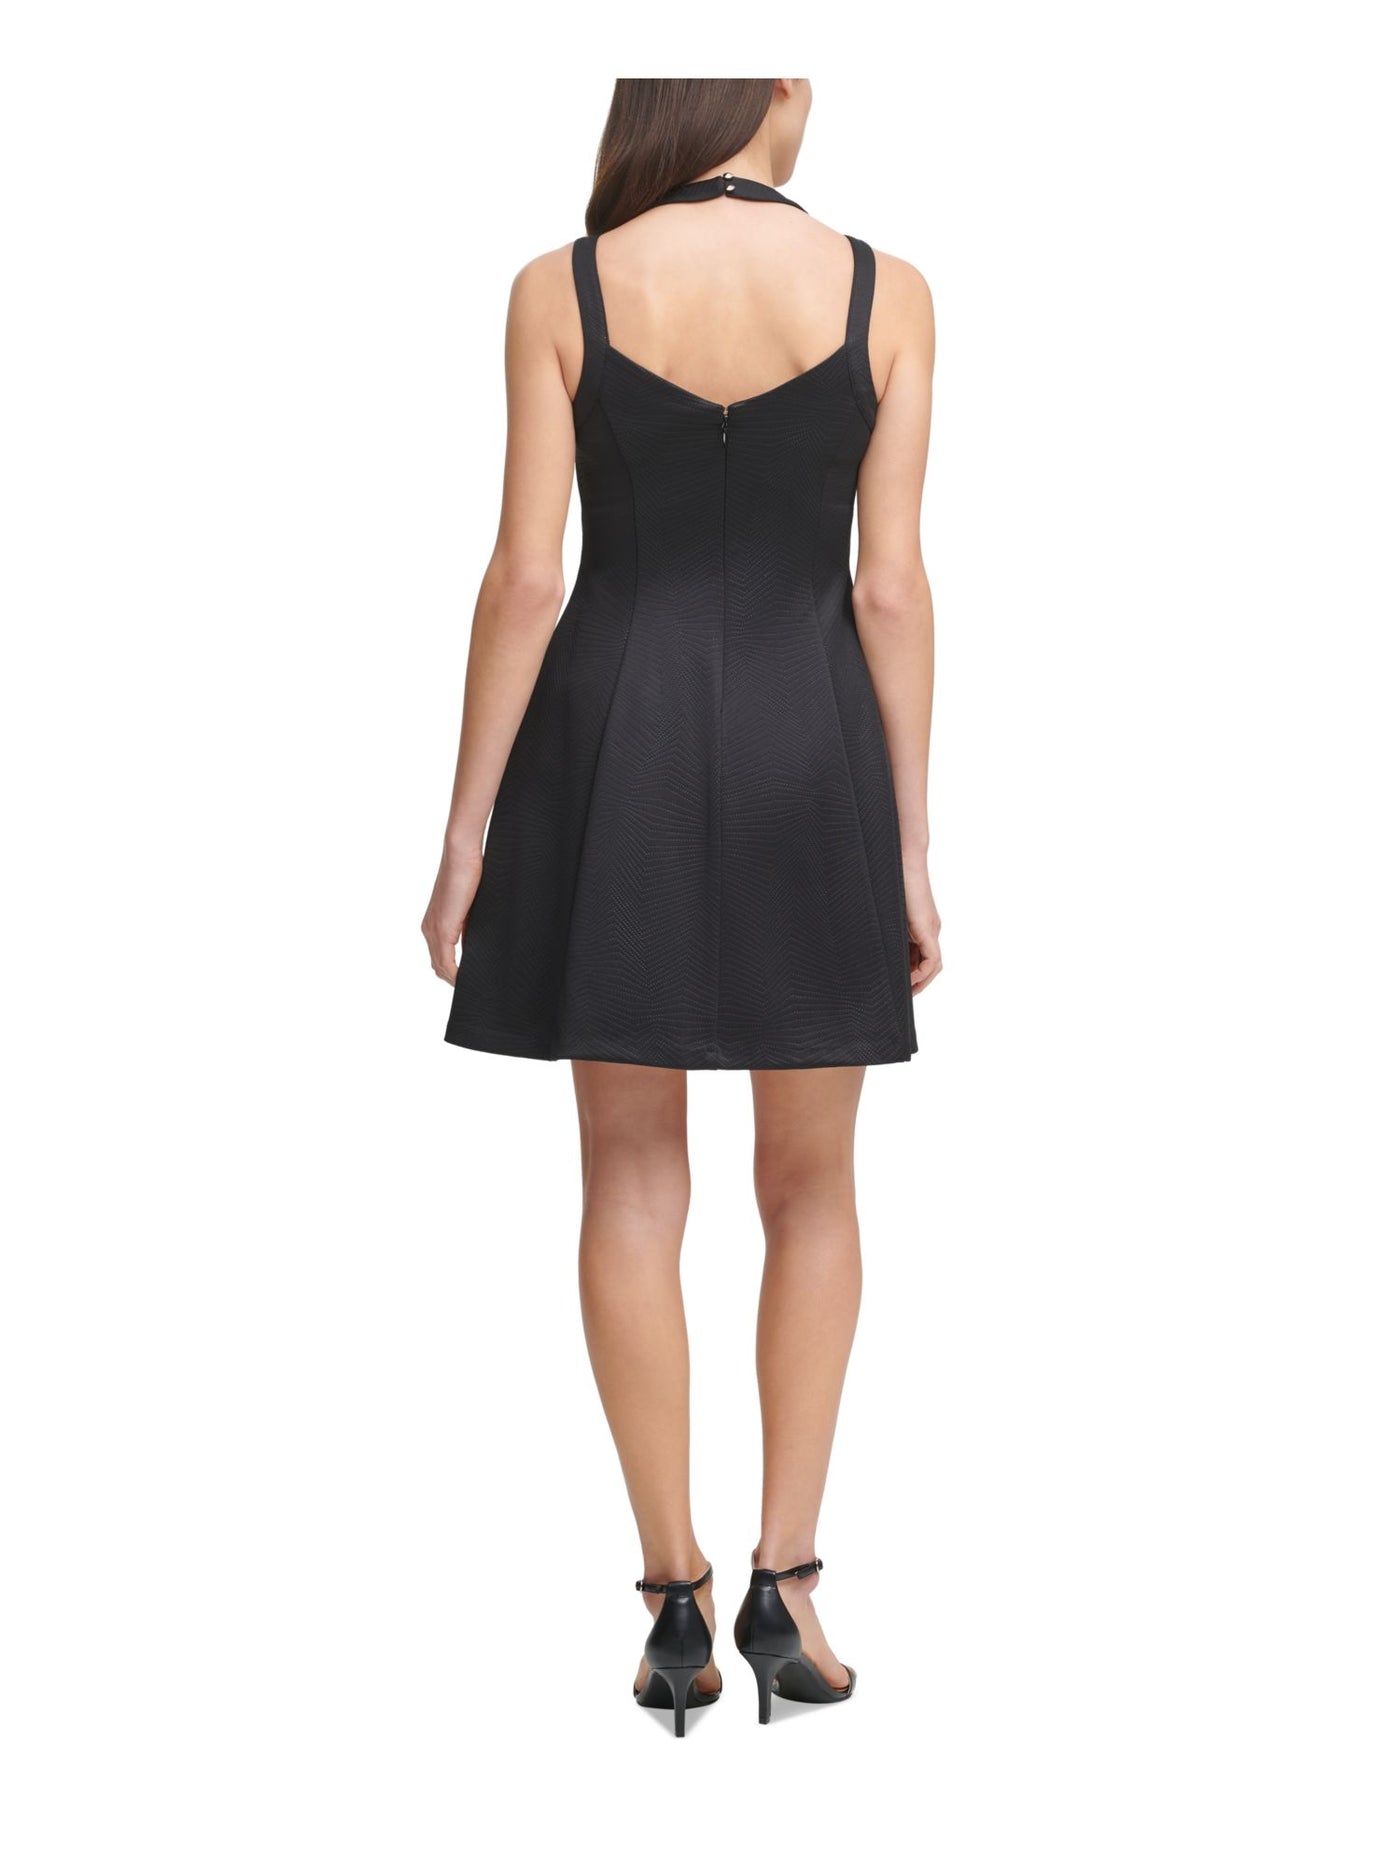 GUESS Womens Black Zippered Lined Sleeveless Halter Short Fit + Flare Dress 6